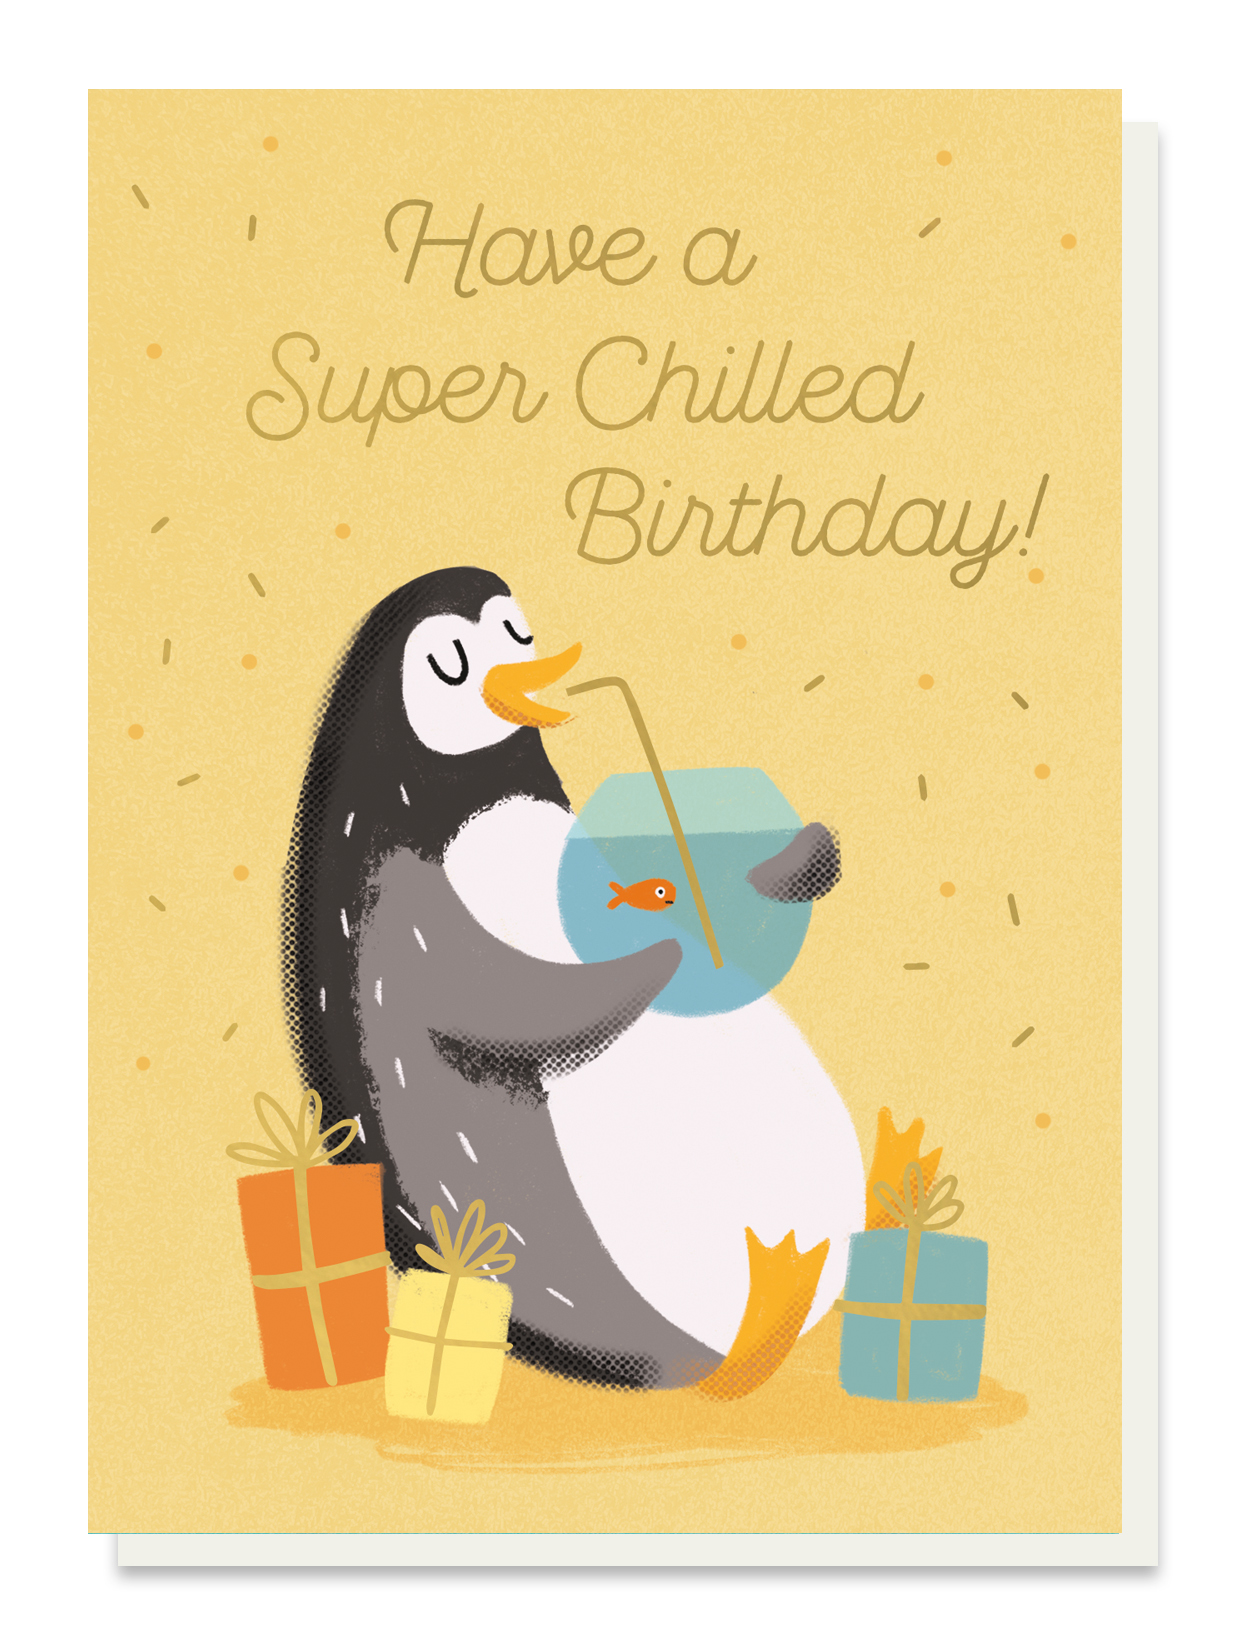 Chillde birthda penguin card by stormy knight